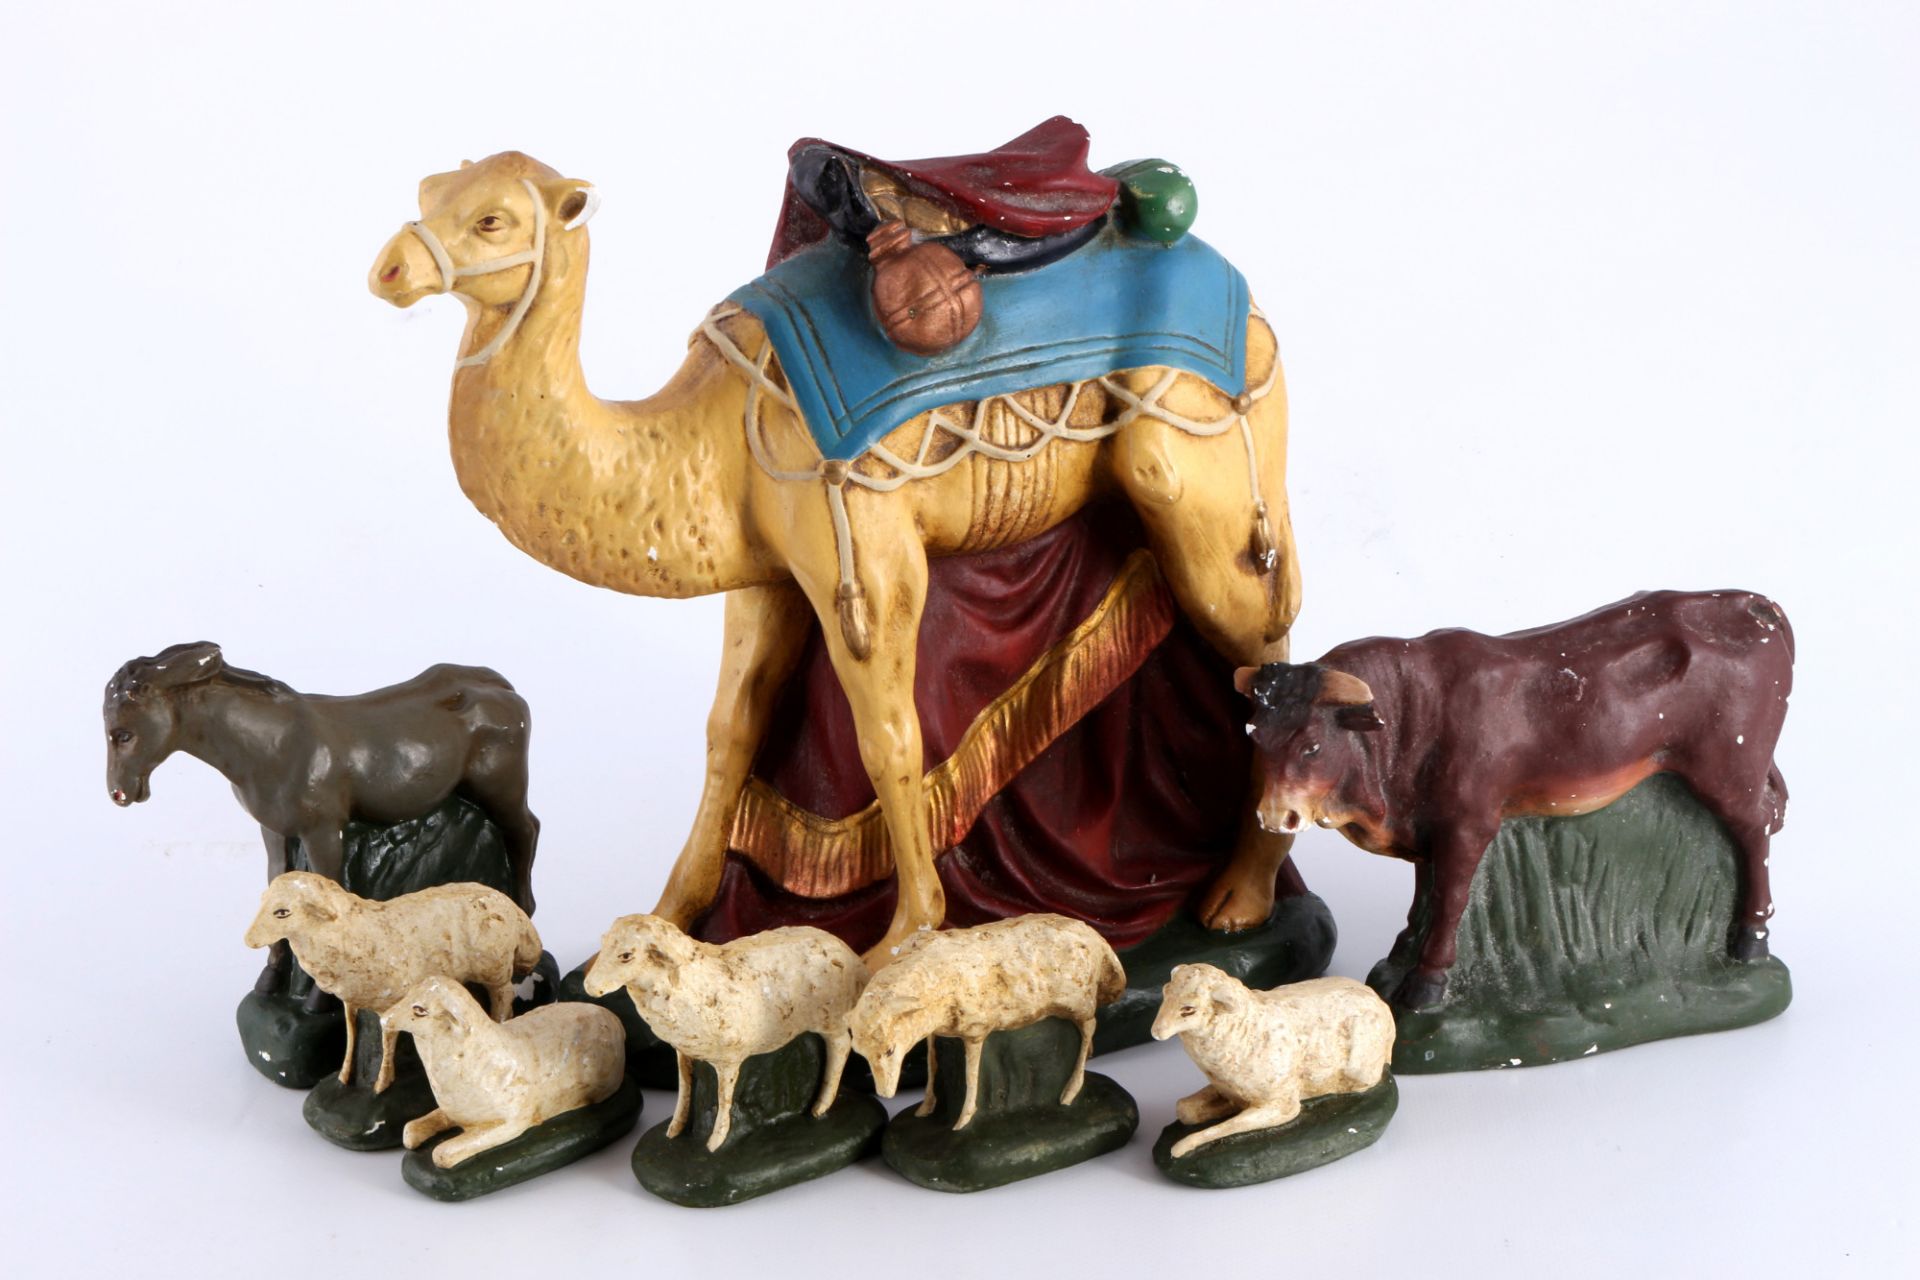 Nativity figure collection 18-piece, monogrammed J.ST., Krippenfiguren Sammlung, - Image 5 of 6